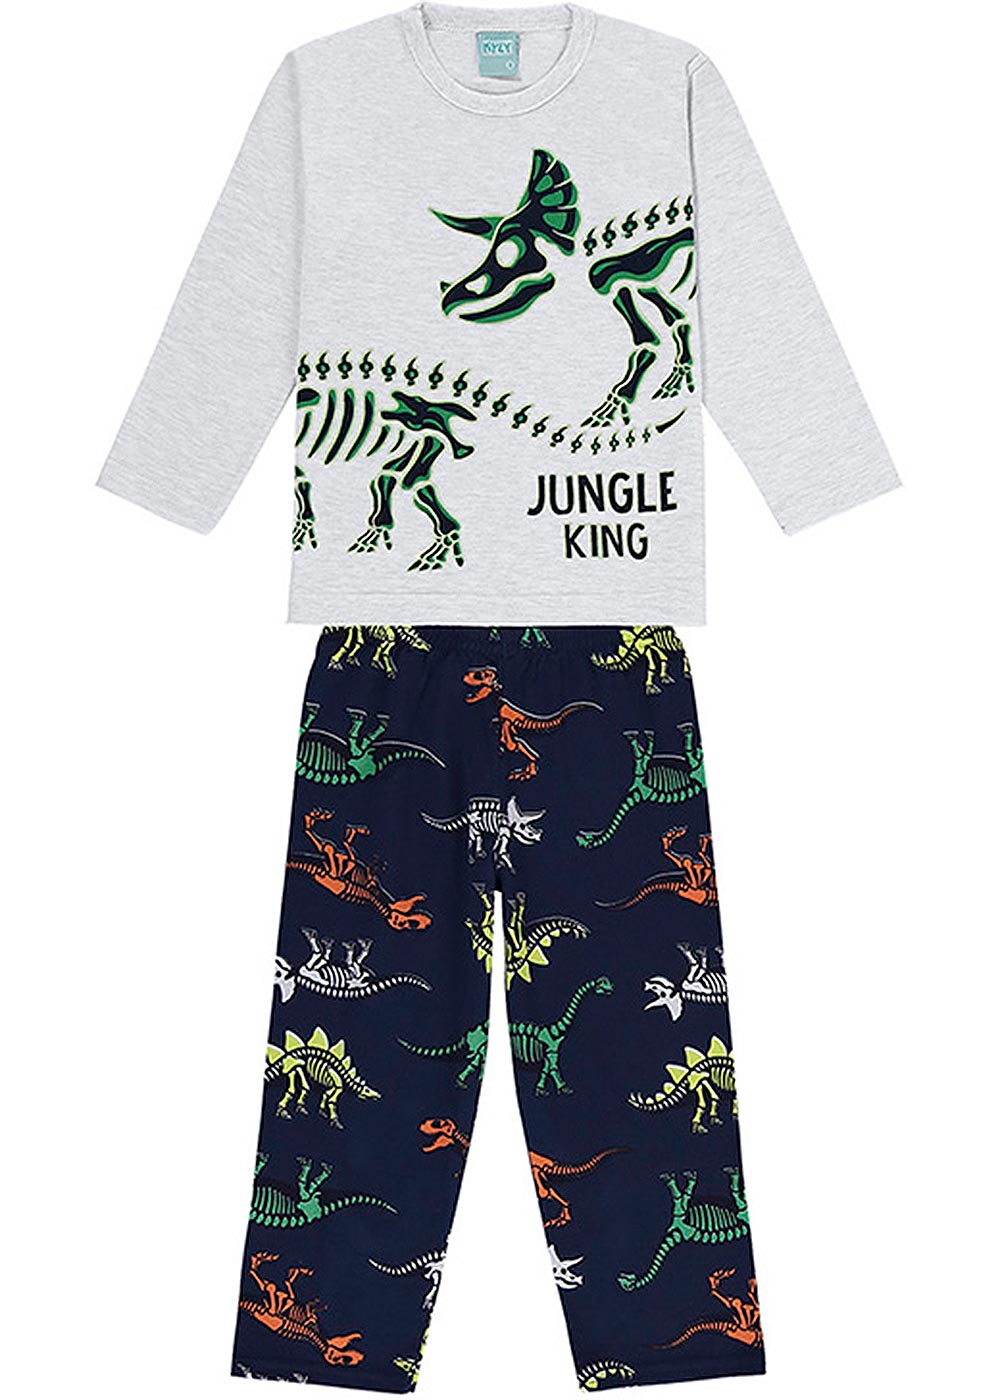 Pijama Infantil Masculino Inverno Cinza Jungle King Brilha no Escuro - Kyly